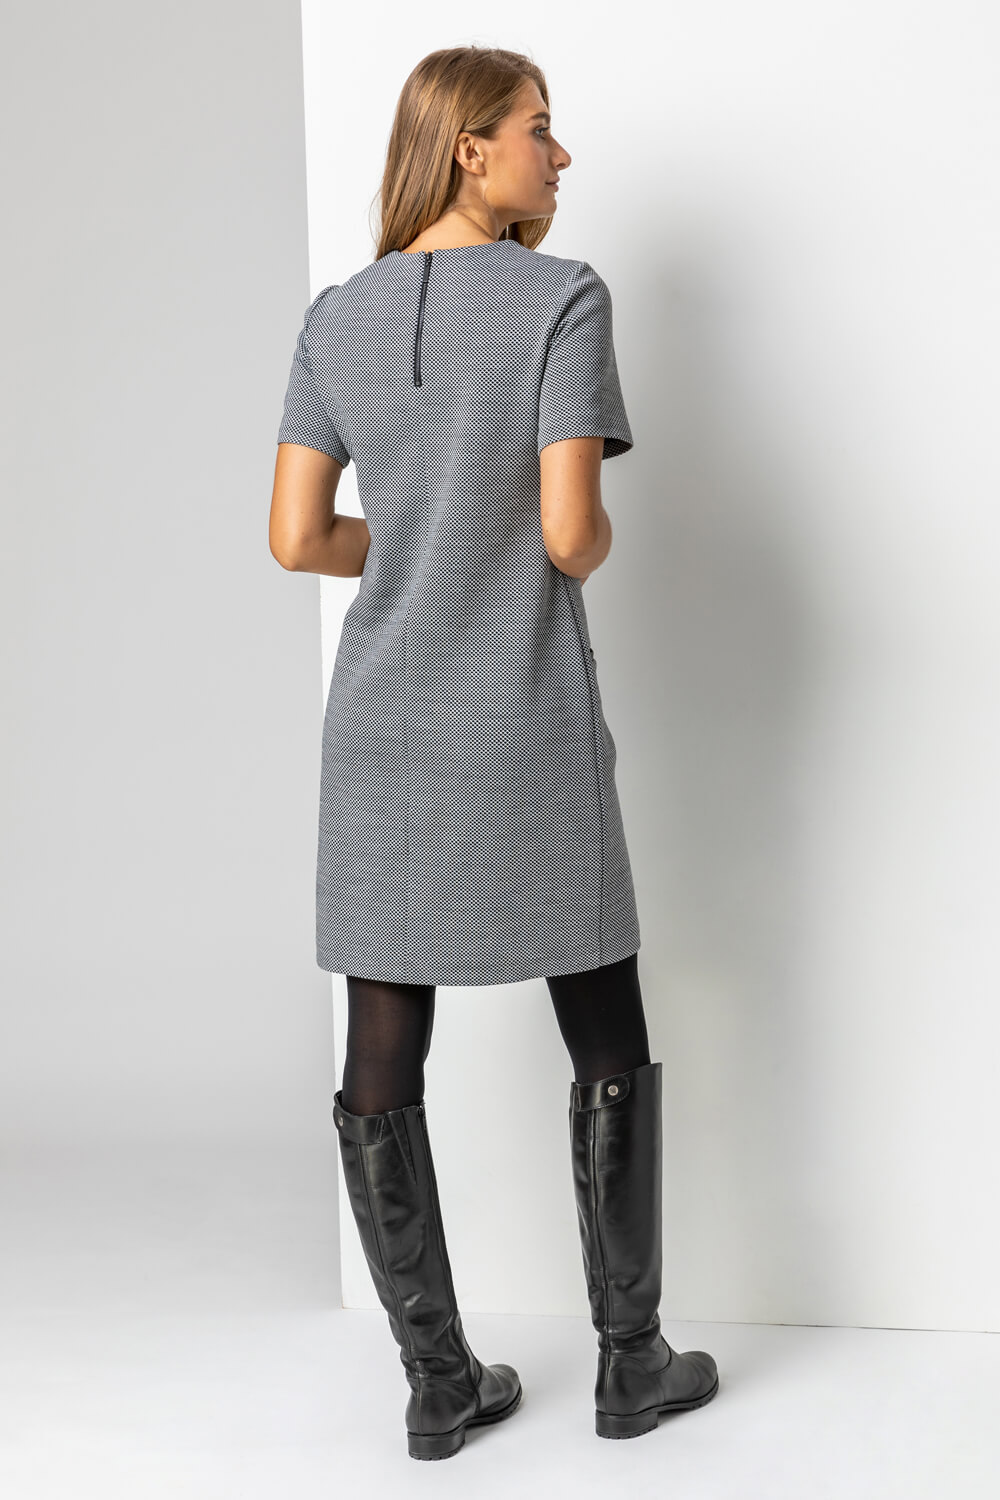 Black Jacquard Pocket Trim Shift Dress, Image 2 of 4